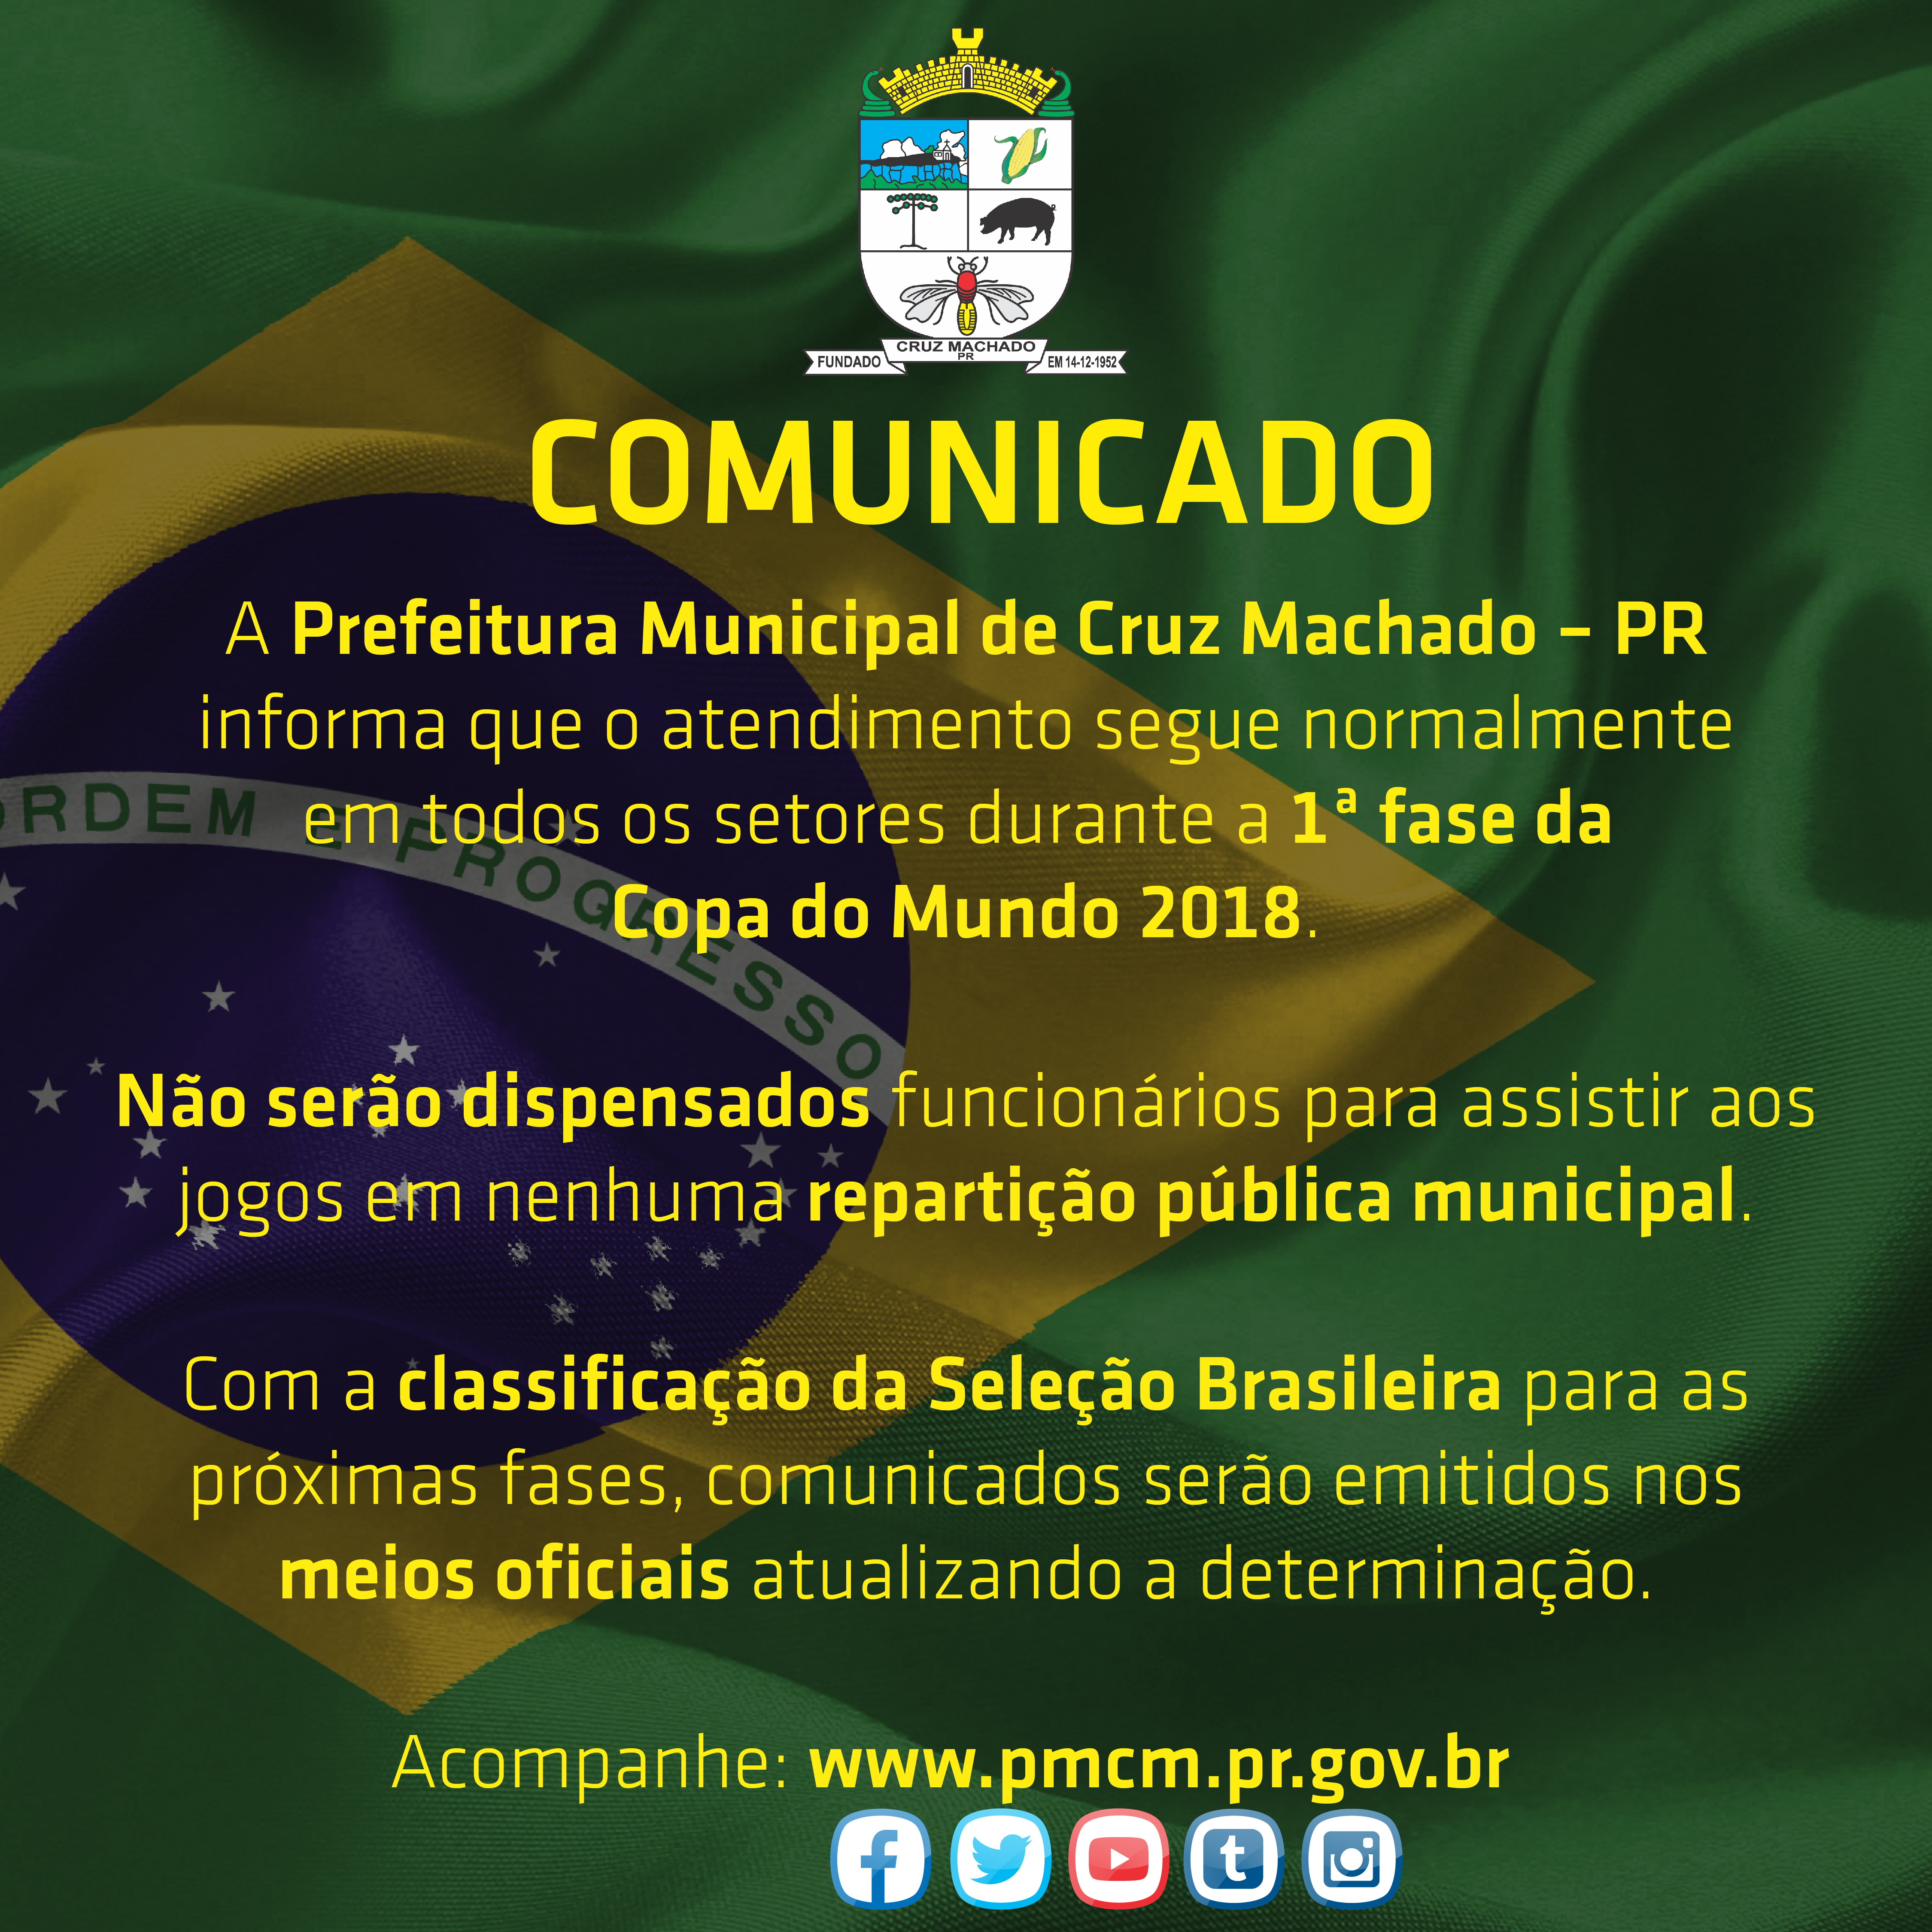 Comunicado Expediente – Copa do Mundo – Durante a 1ª fase dos jogos do  Brasil